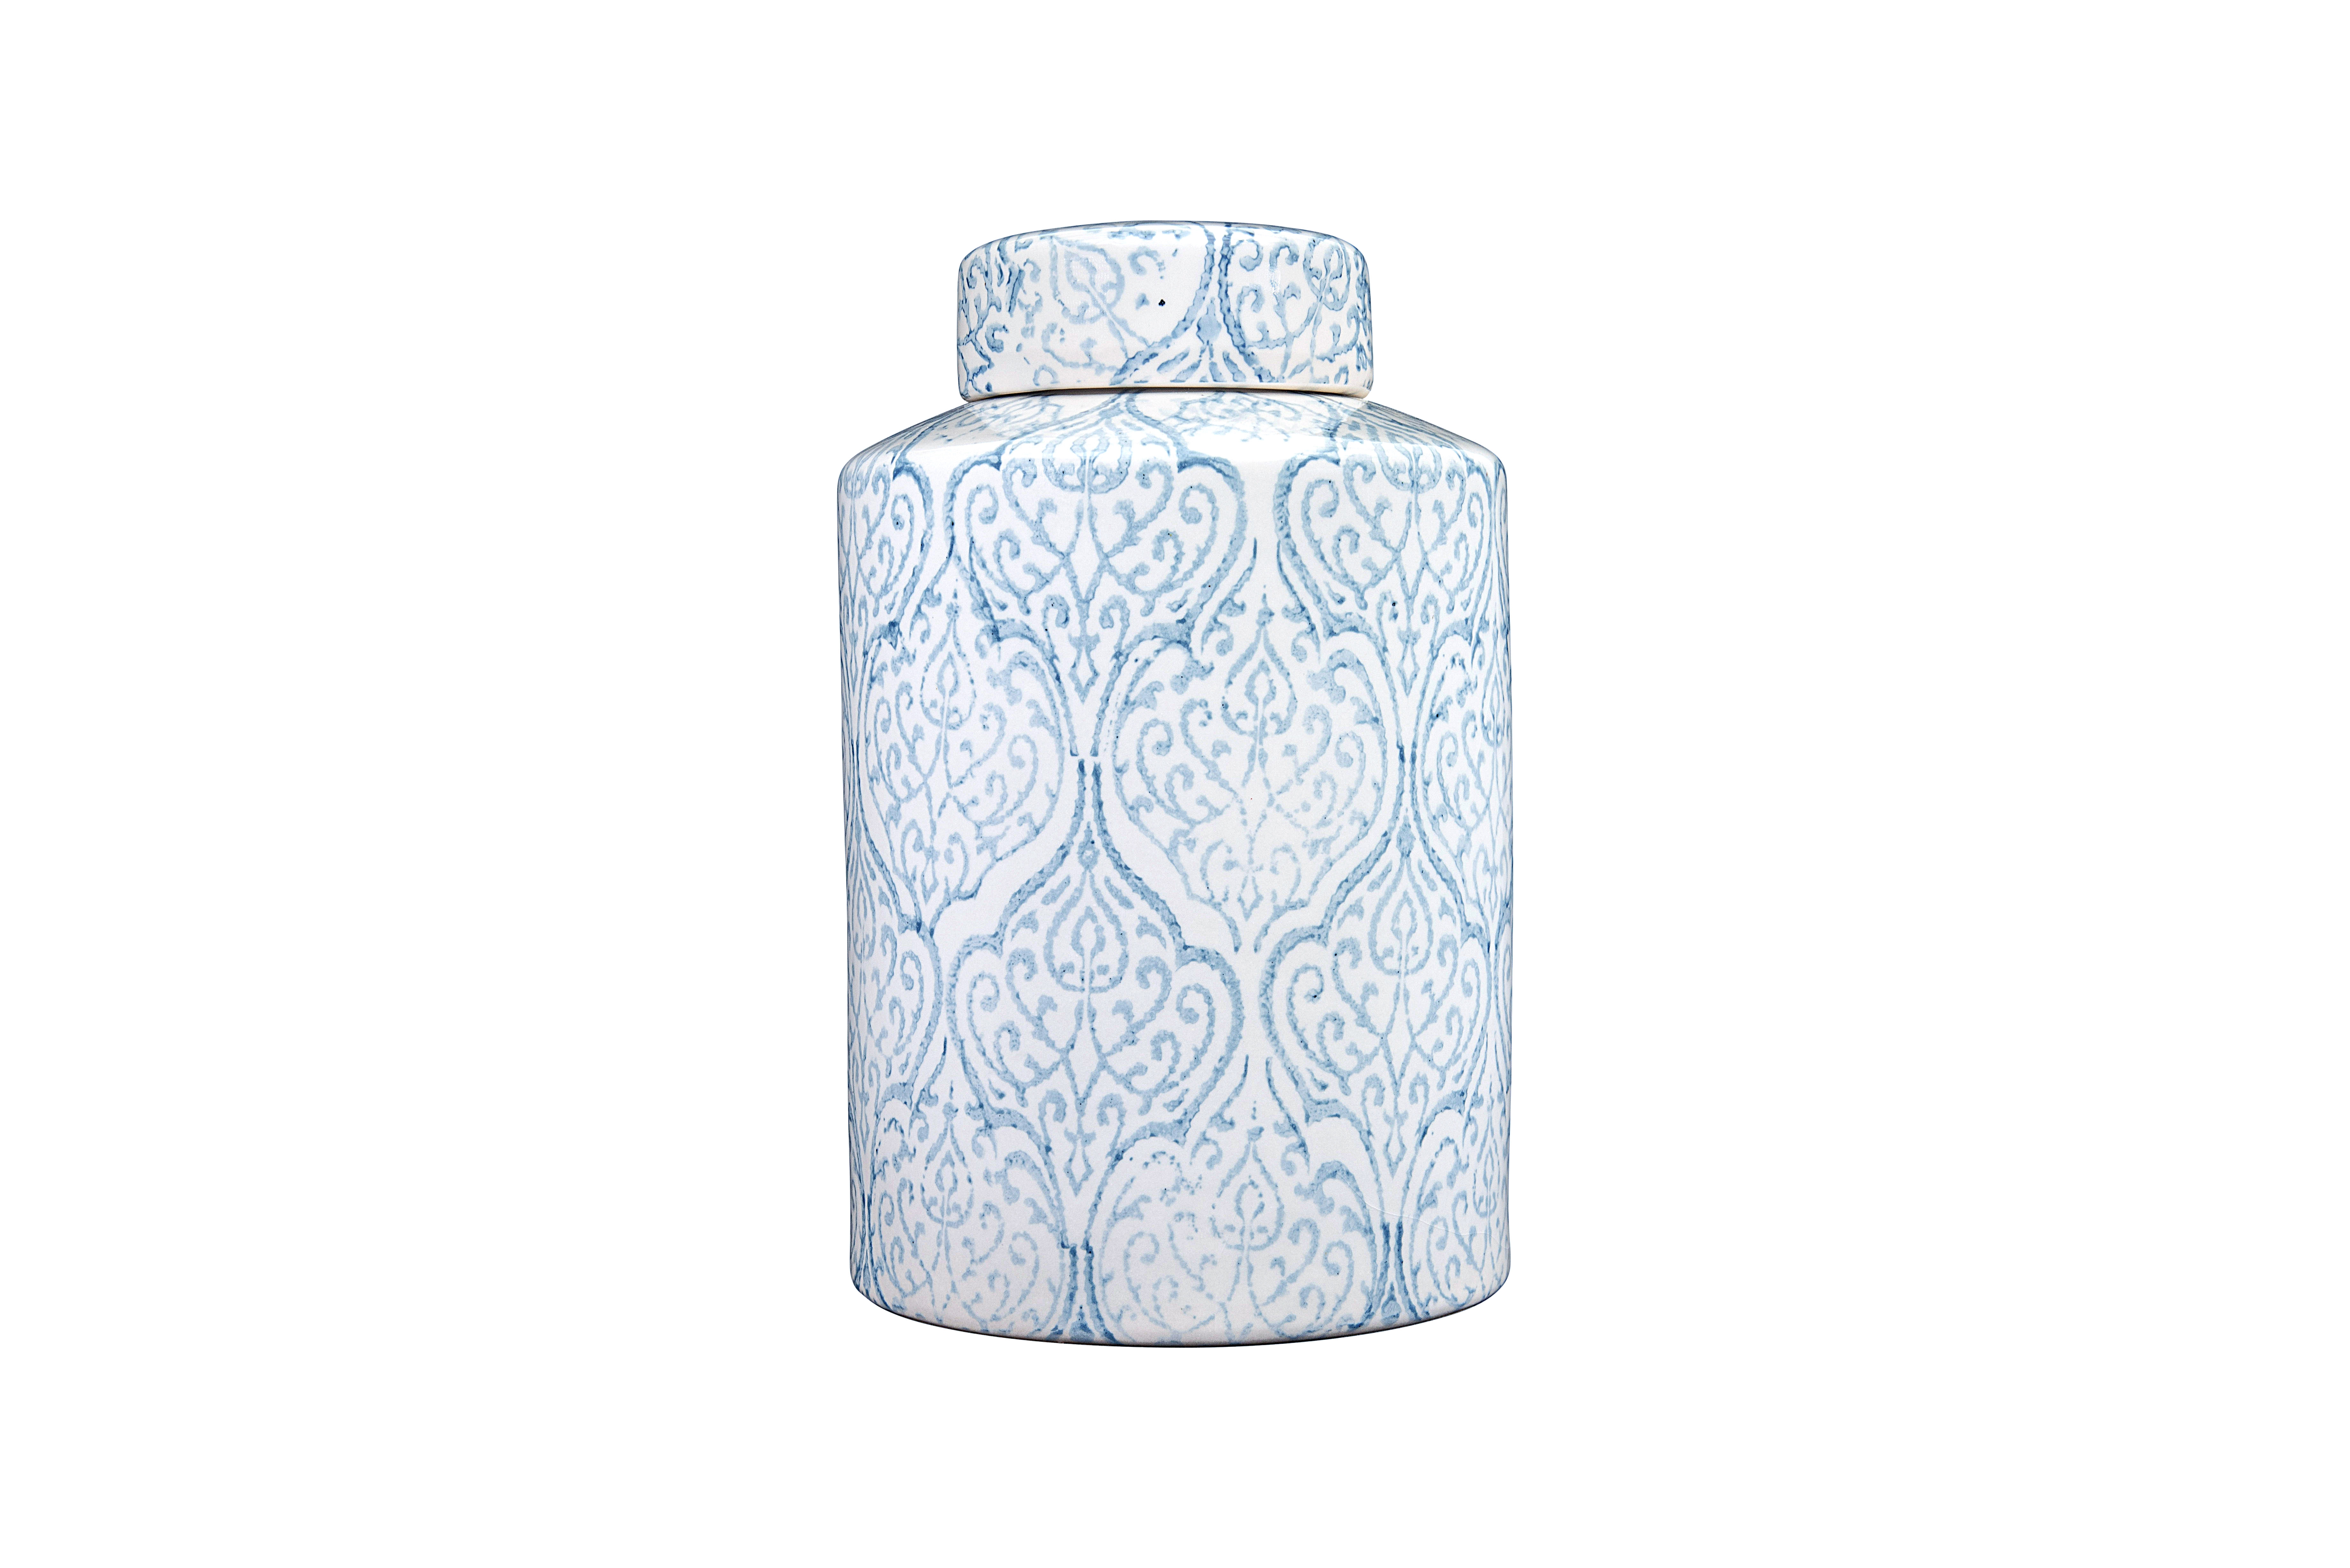 Blue & White Decorative Ginger Jar with Lid - Image 0